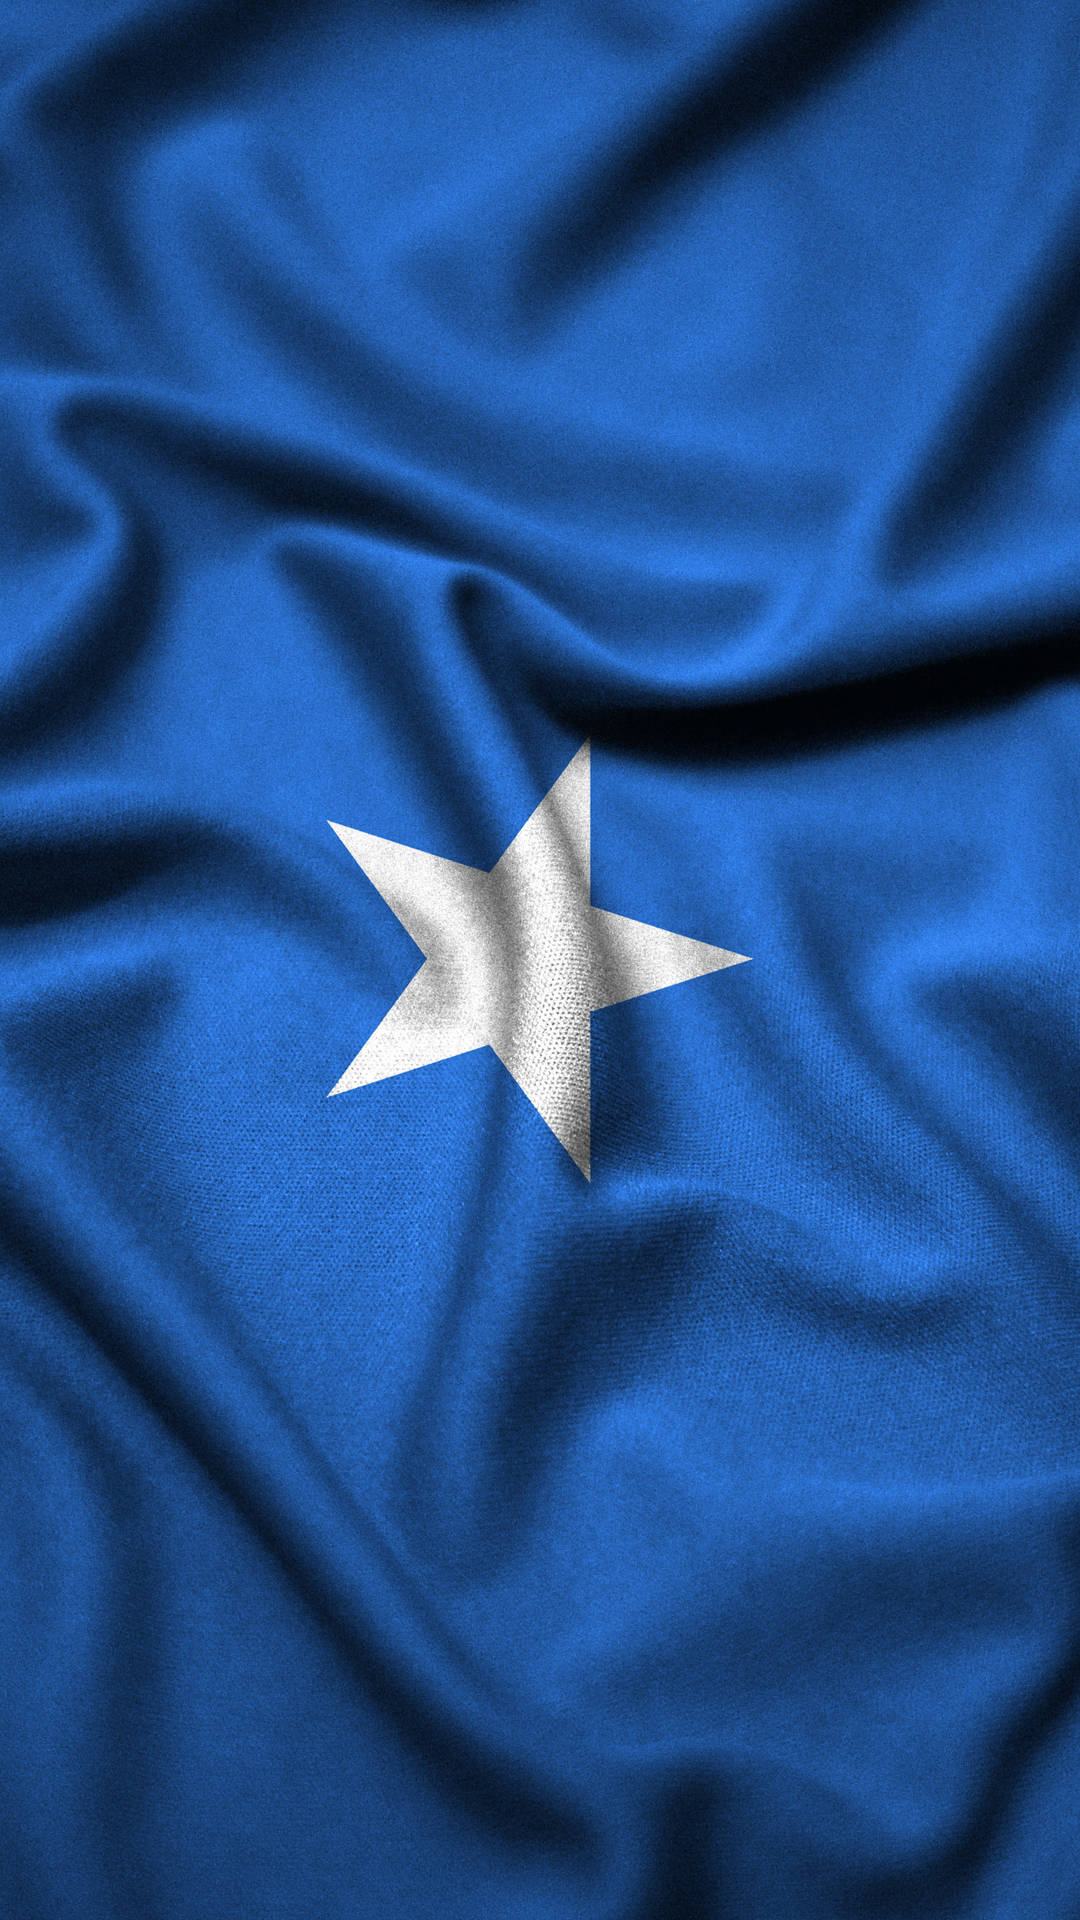 Fondode Pantalla Vertical Con La Bandera Texturizada De Somalia. Fondo de pantalla